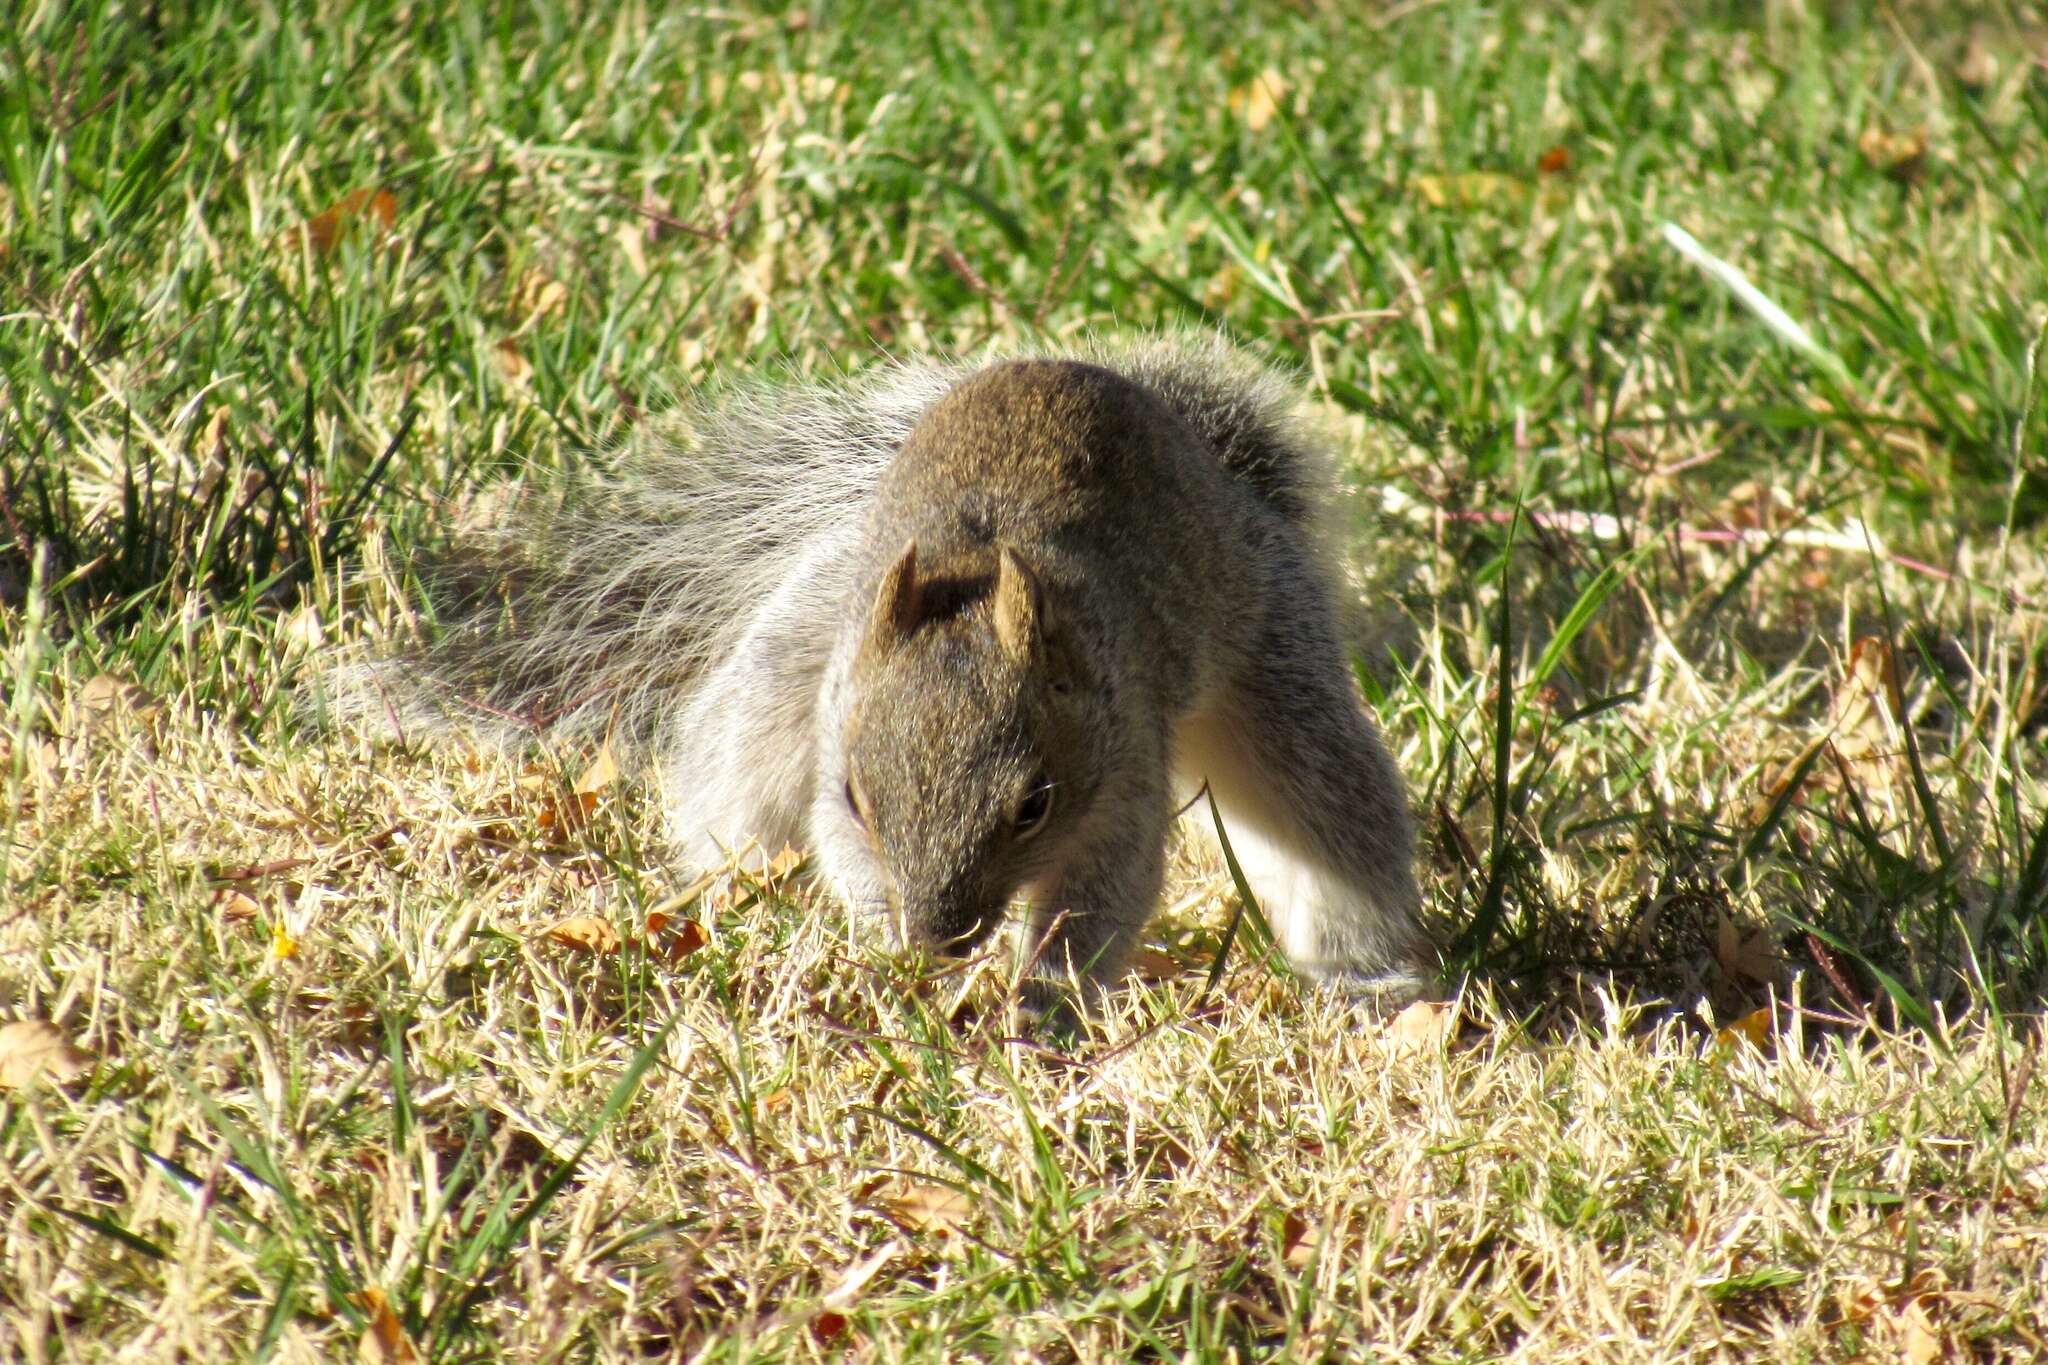 Image of Arizona Gray Squirrel